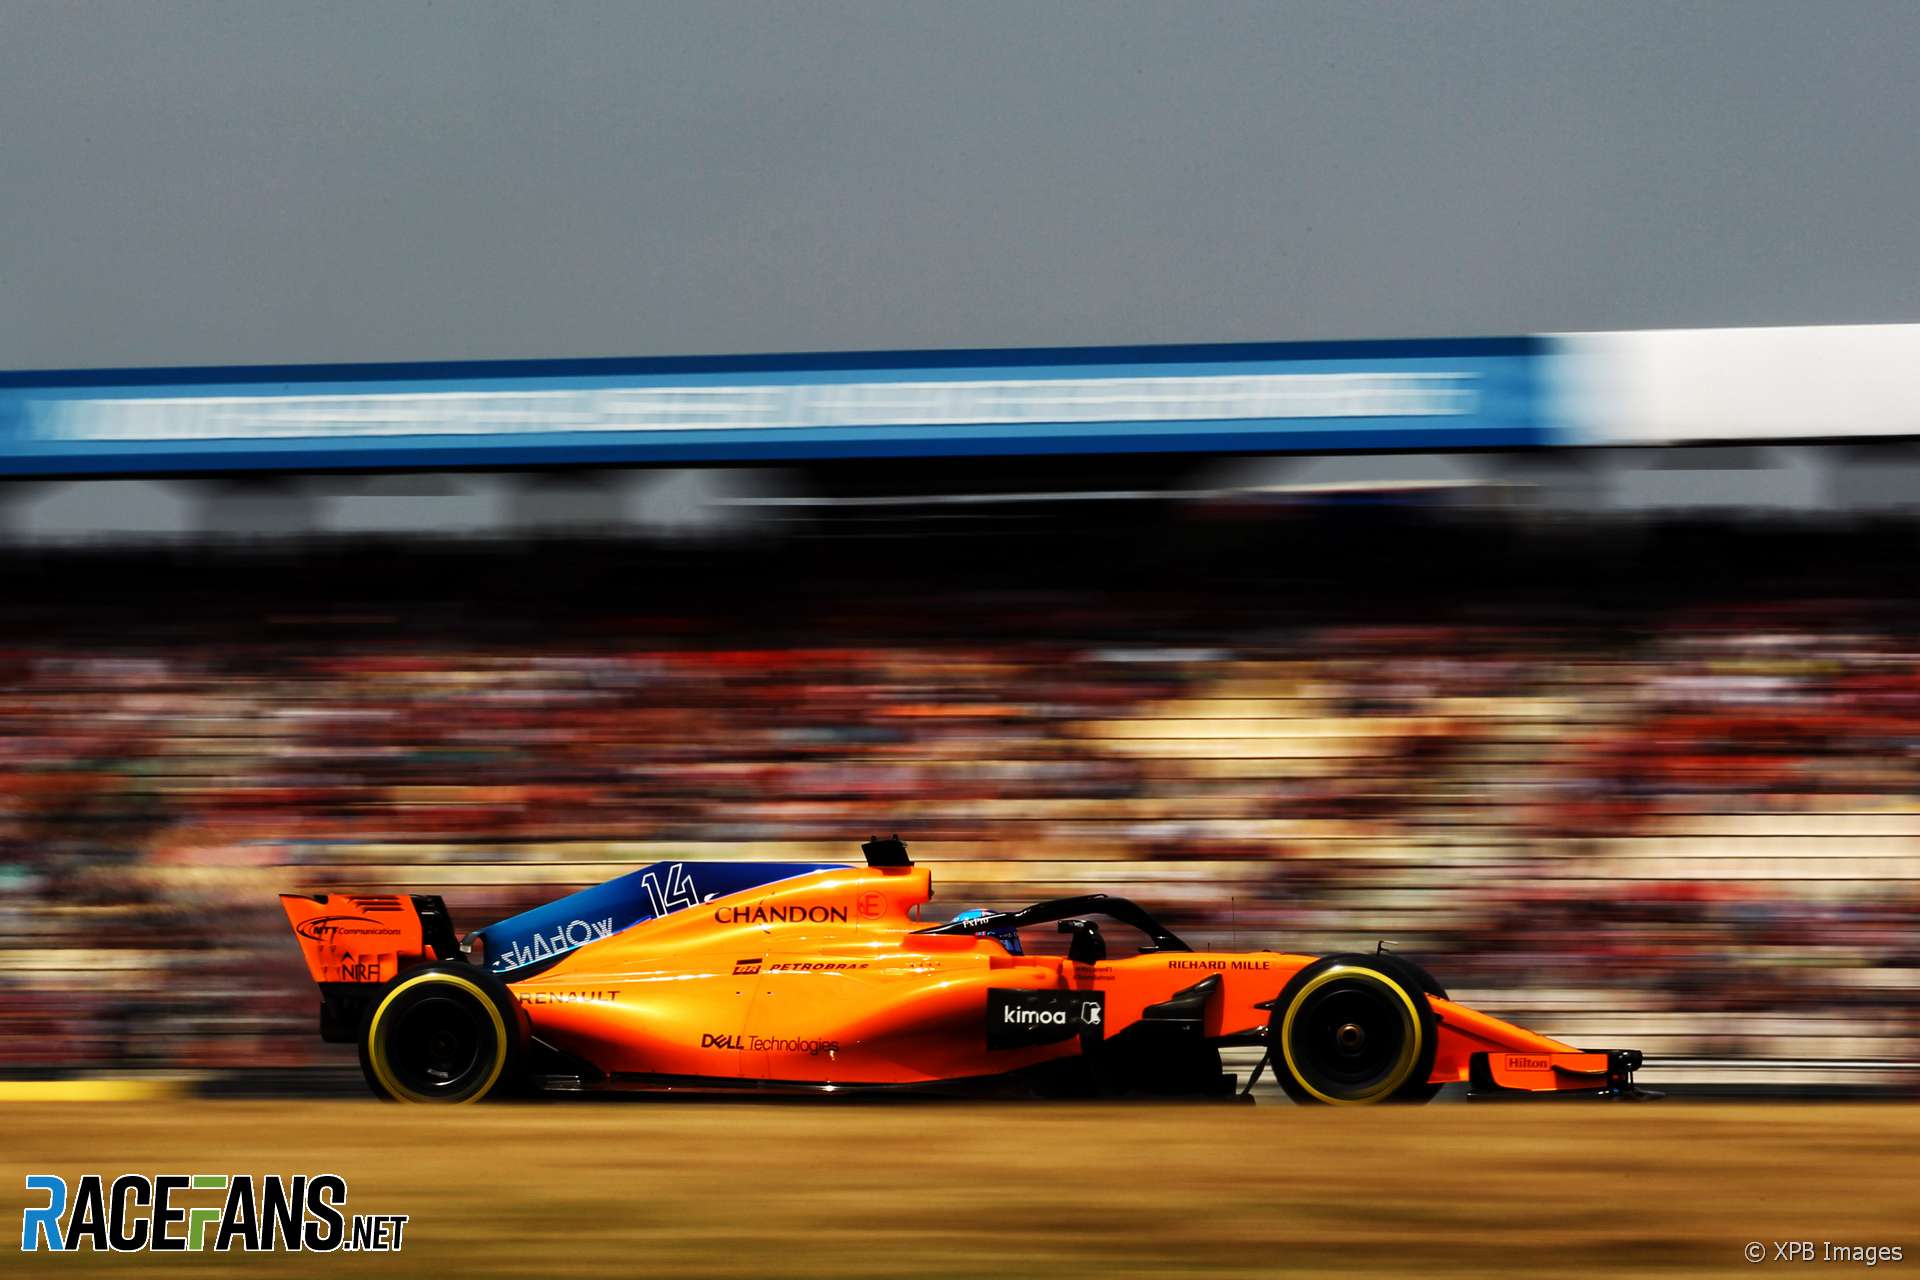 Fernando Alonso, McLaren, Hockenheimring, 2018